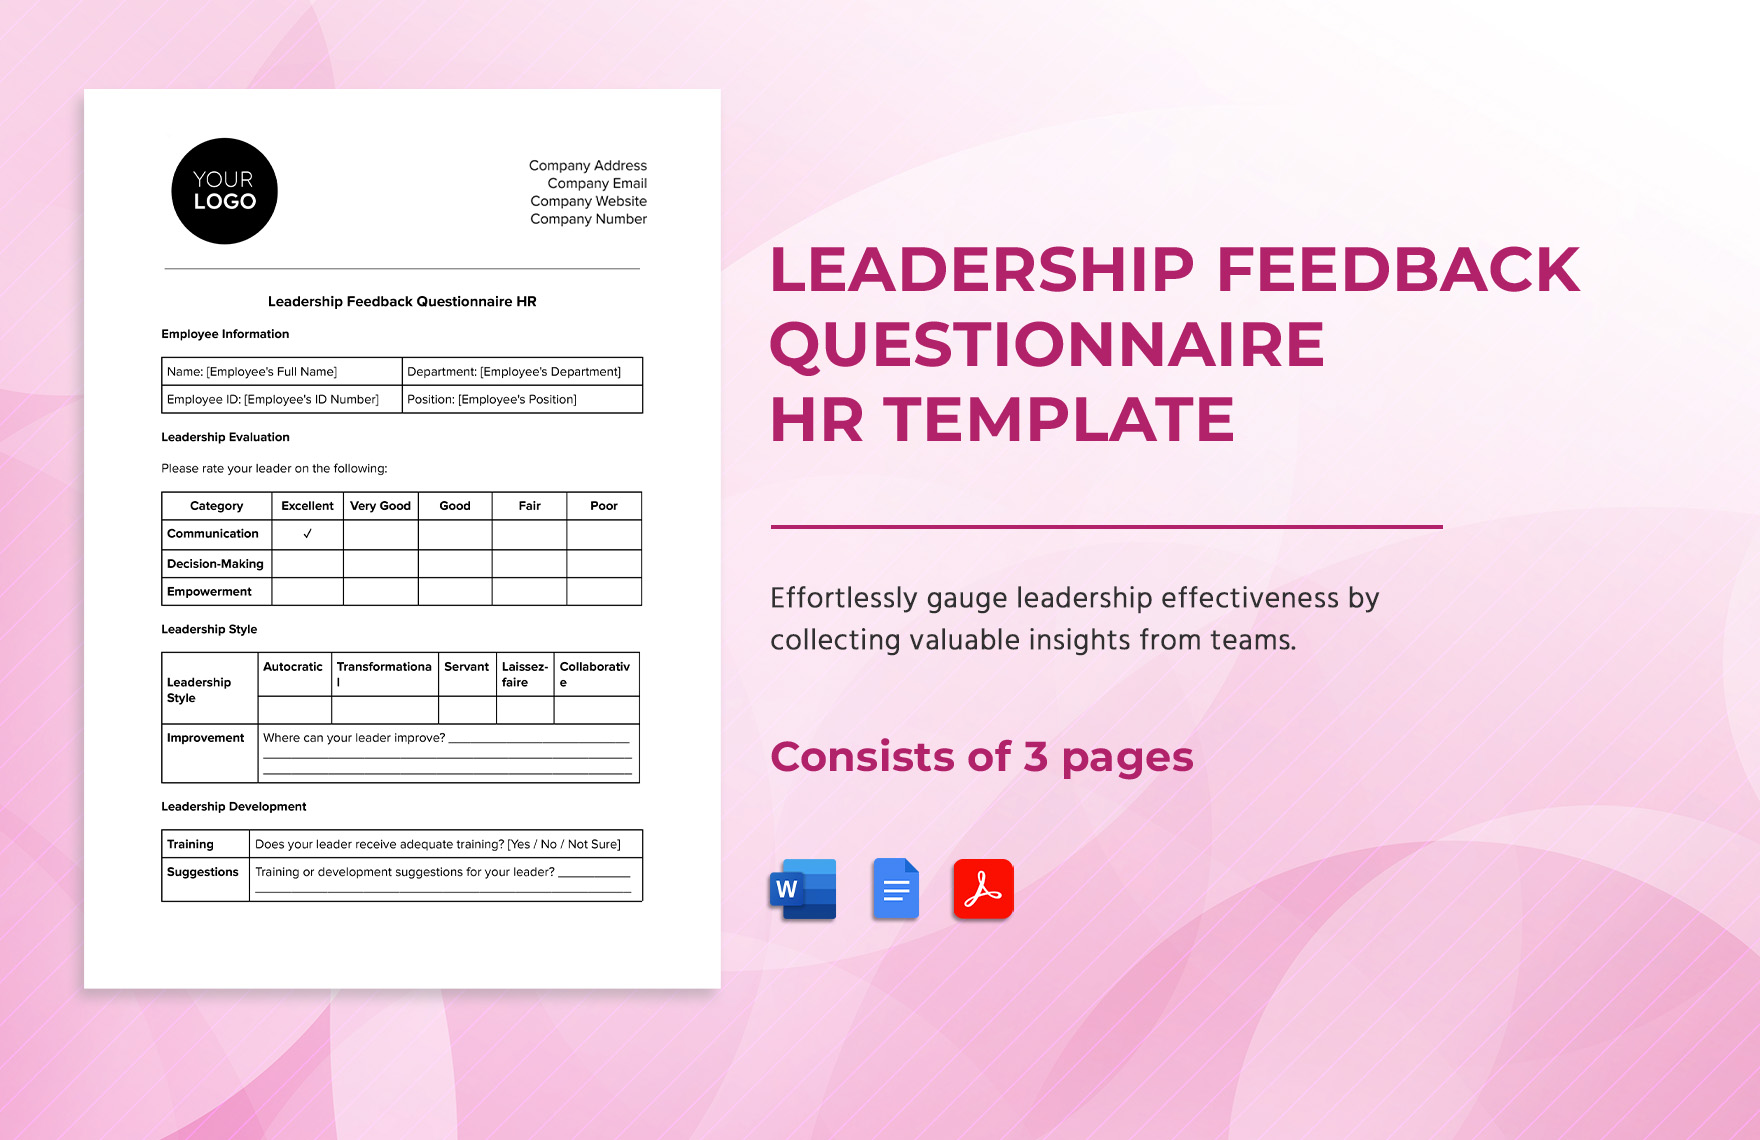 Leadership Feedback Questionnaire HR Template